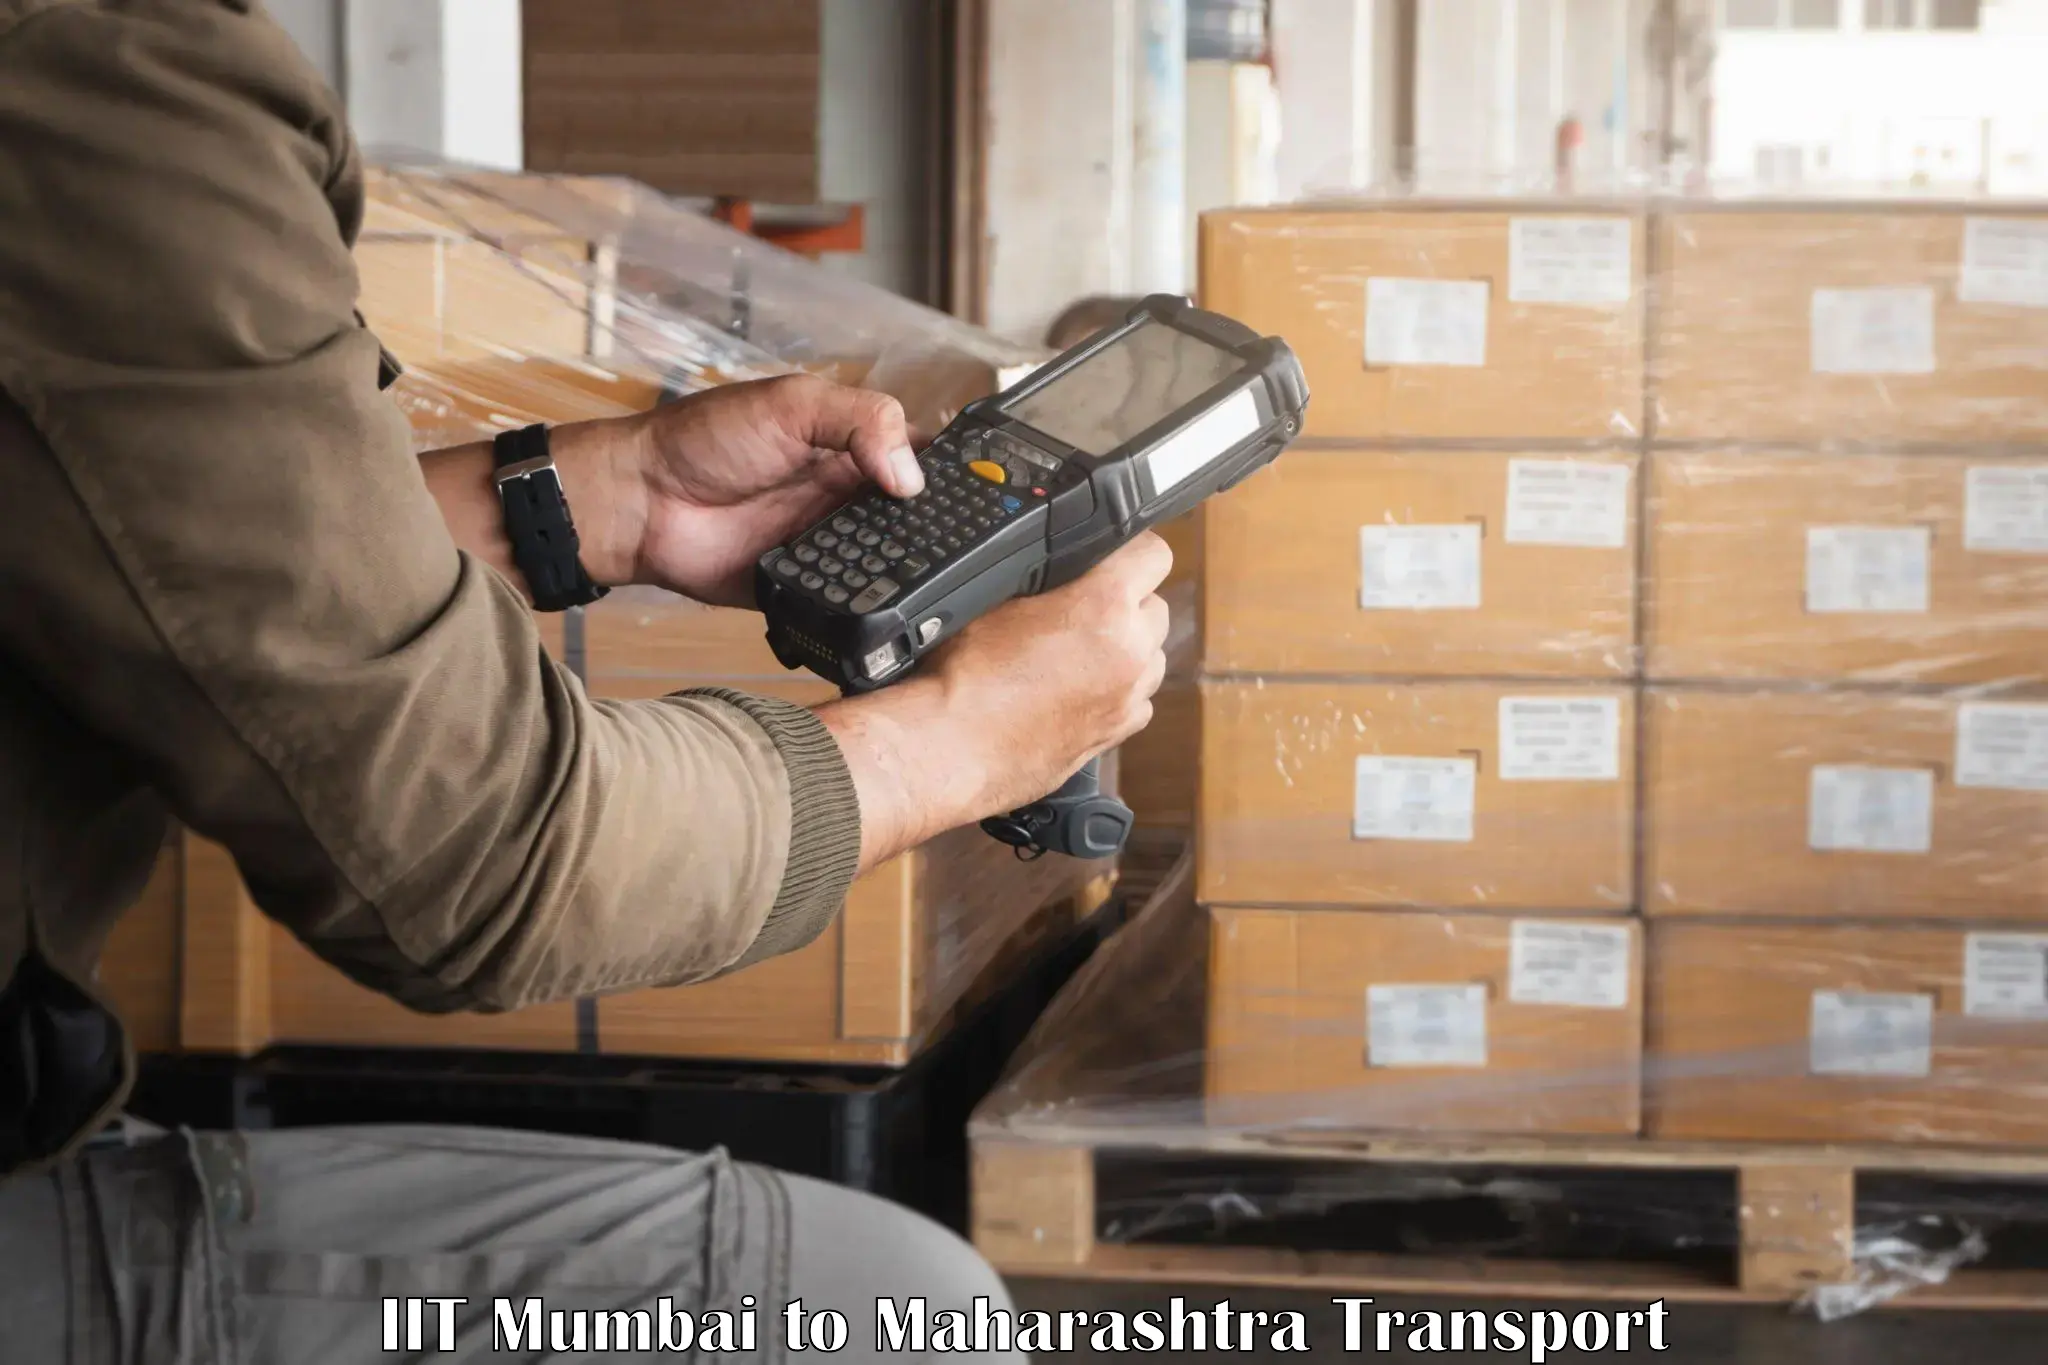 Container transport service IIT Mumbai to Worli